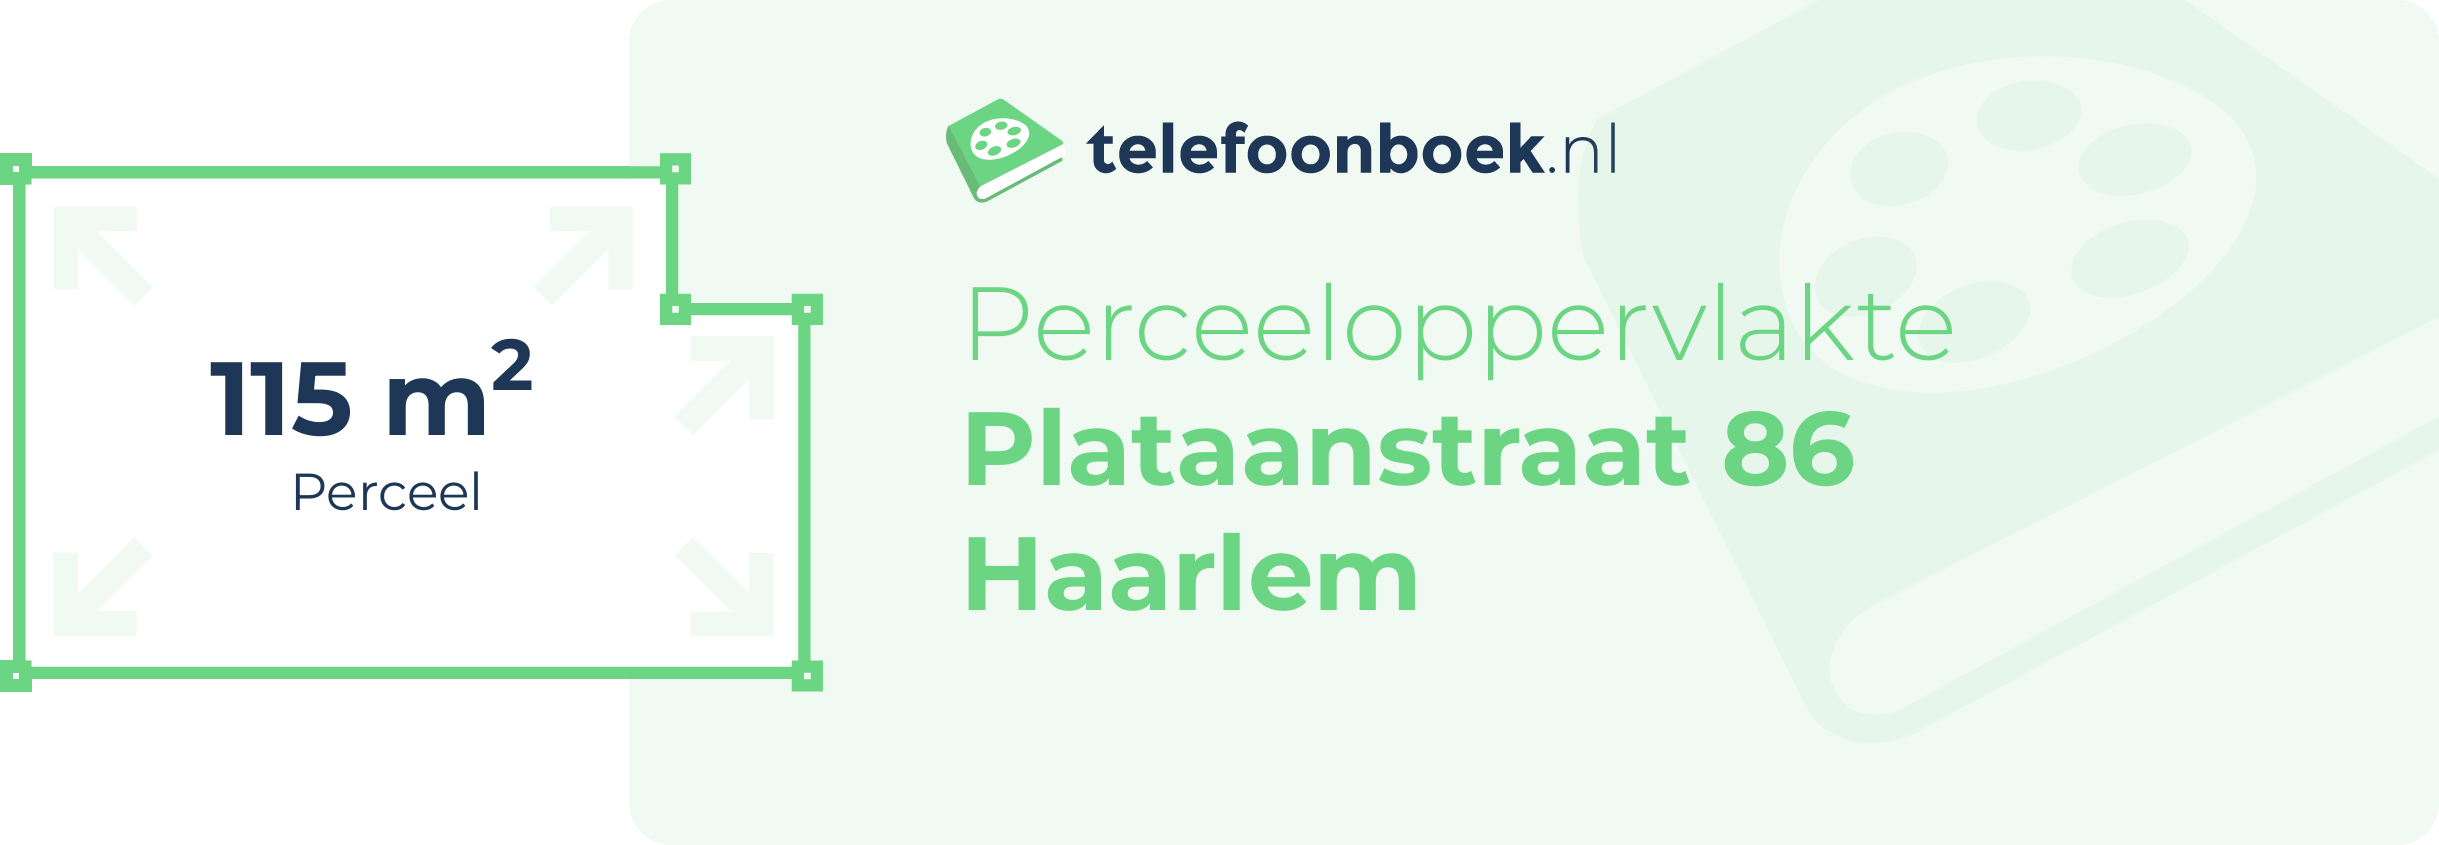 Perceeloppervlakte Plataanstraat 86 Haarlem